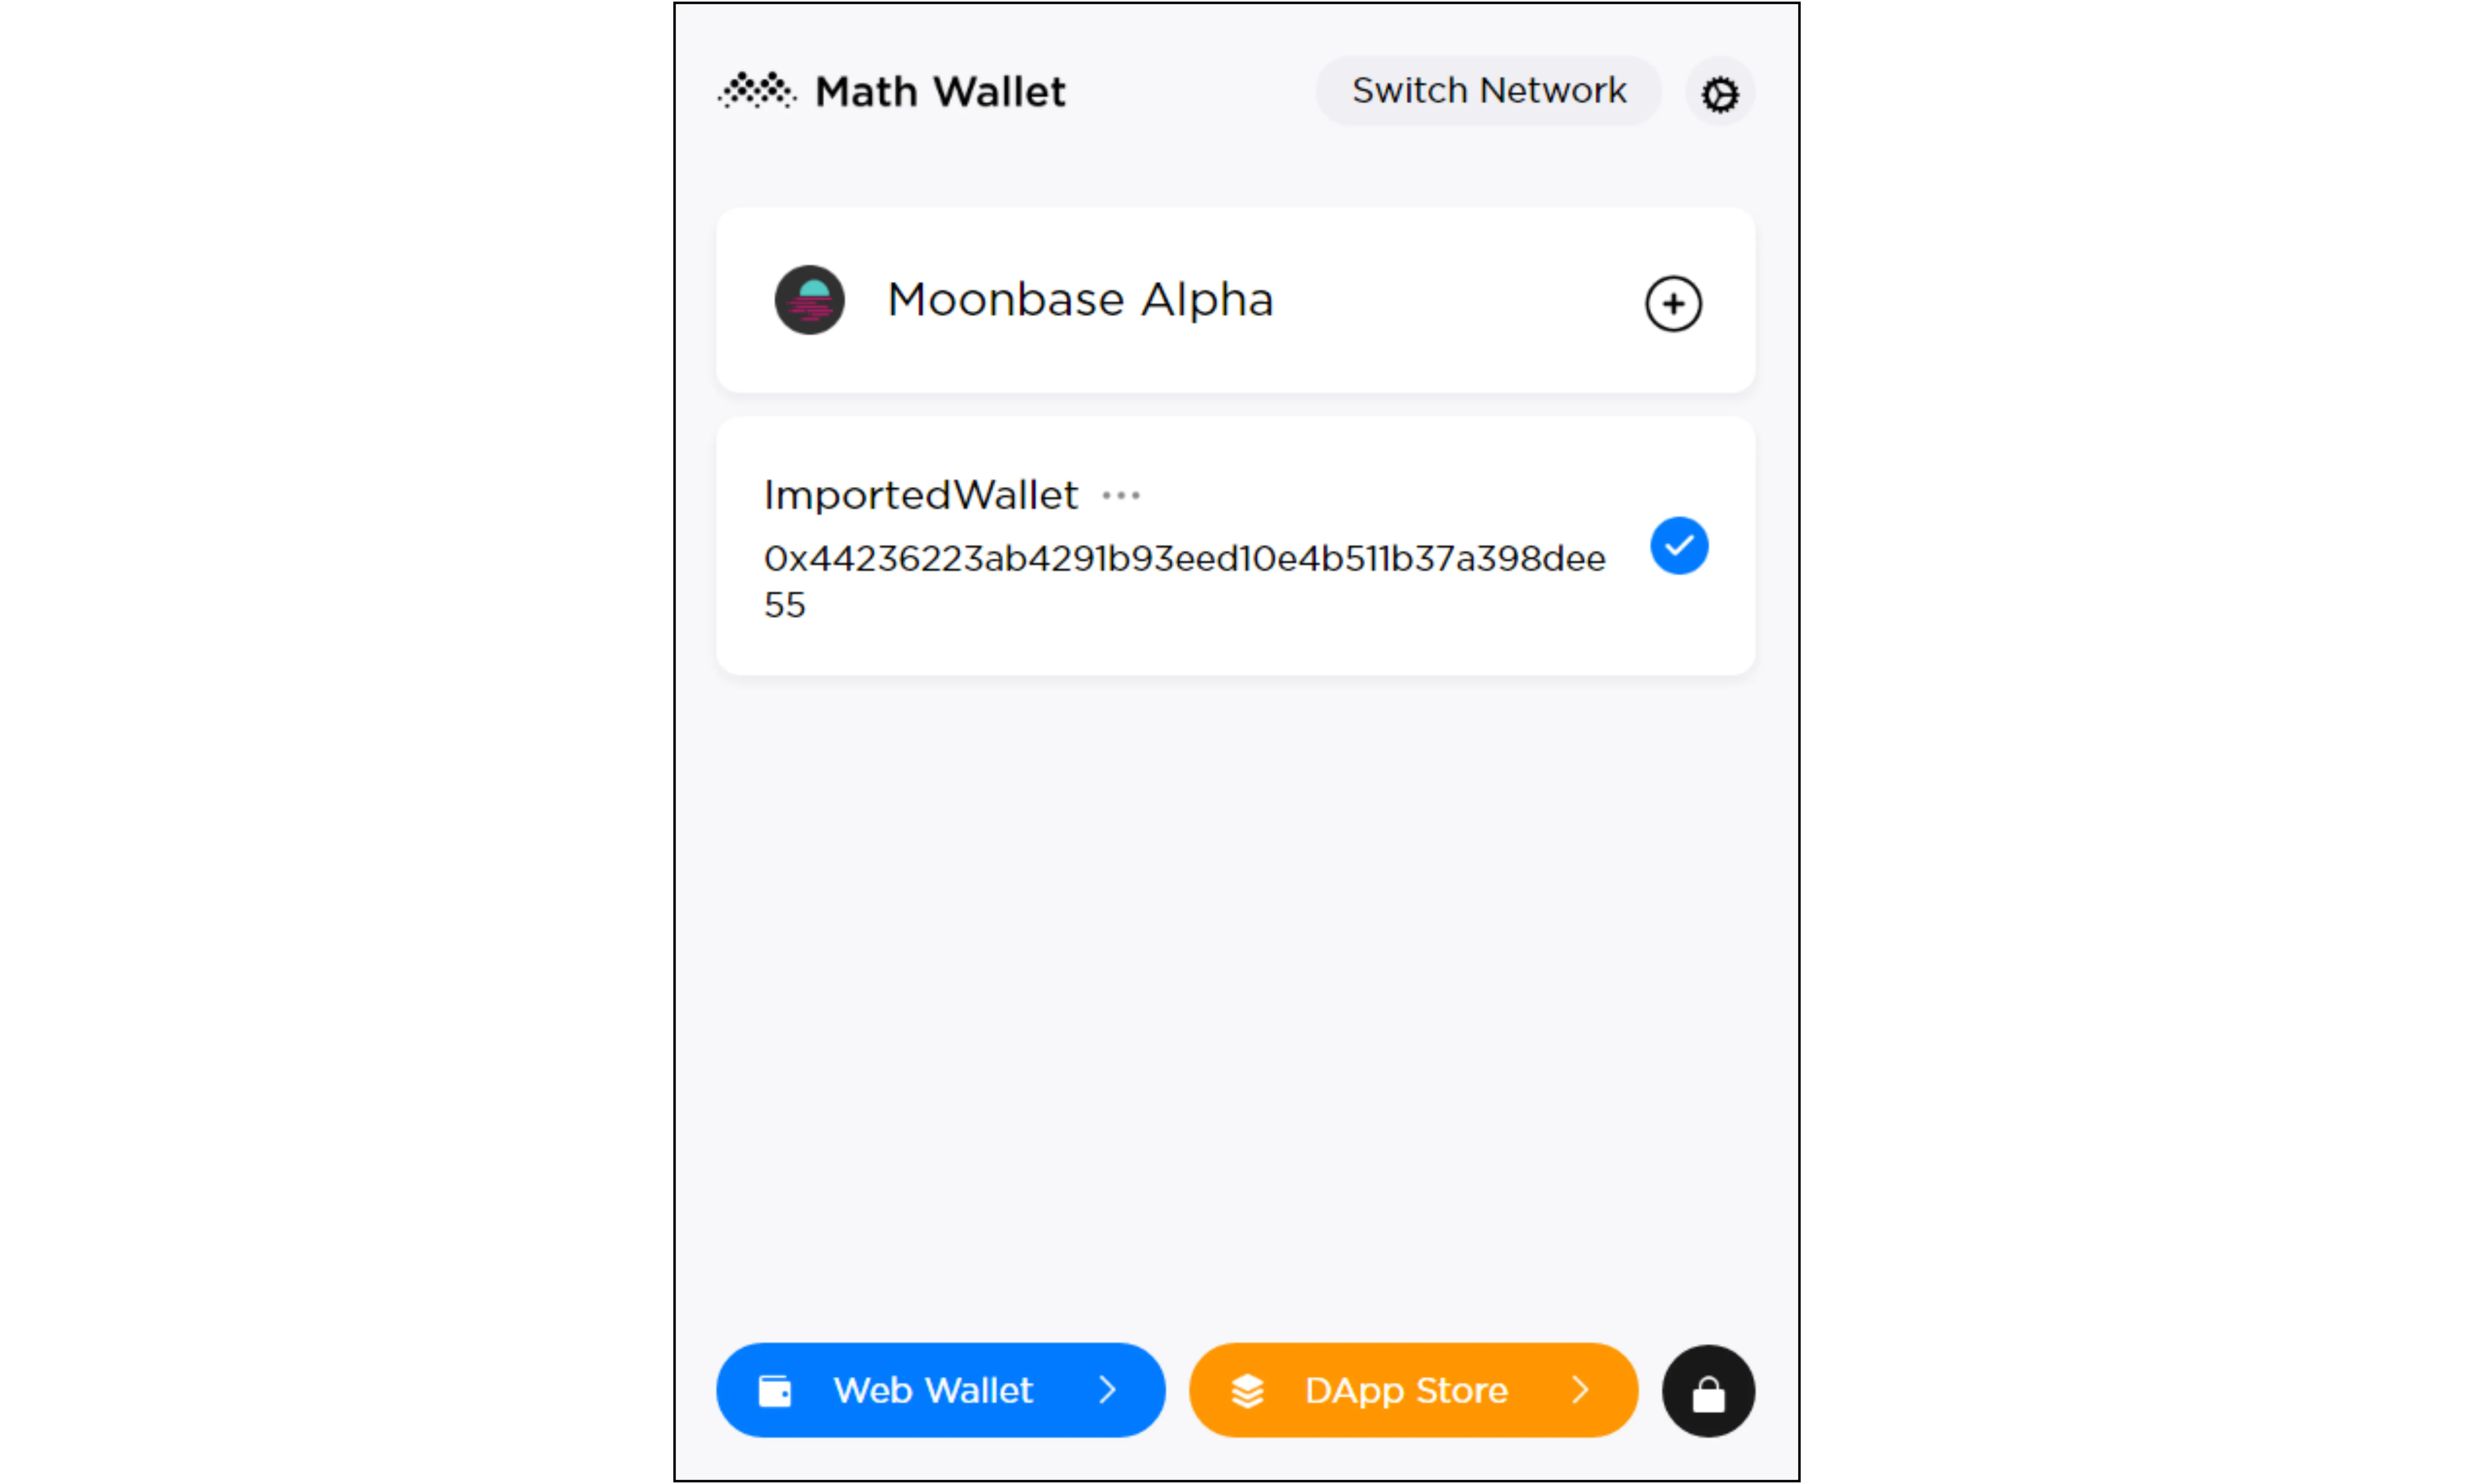 MathWallet imported wallet